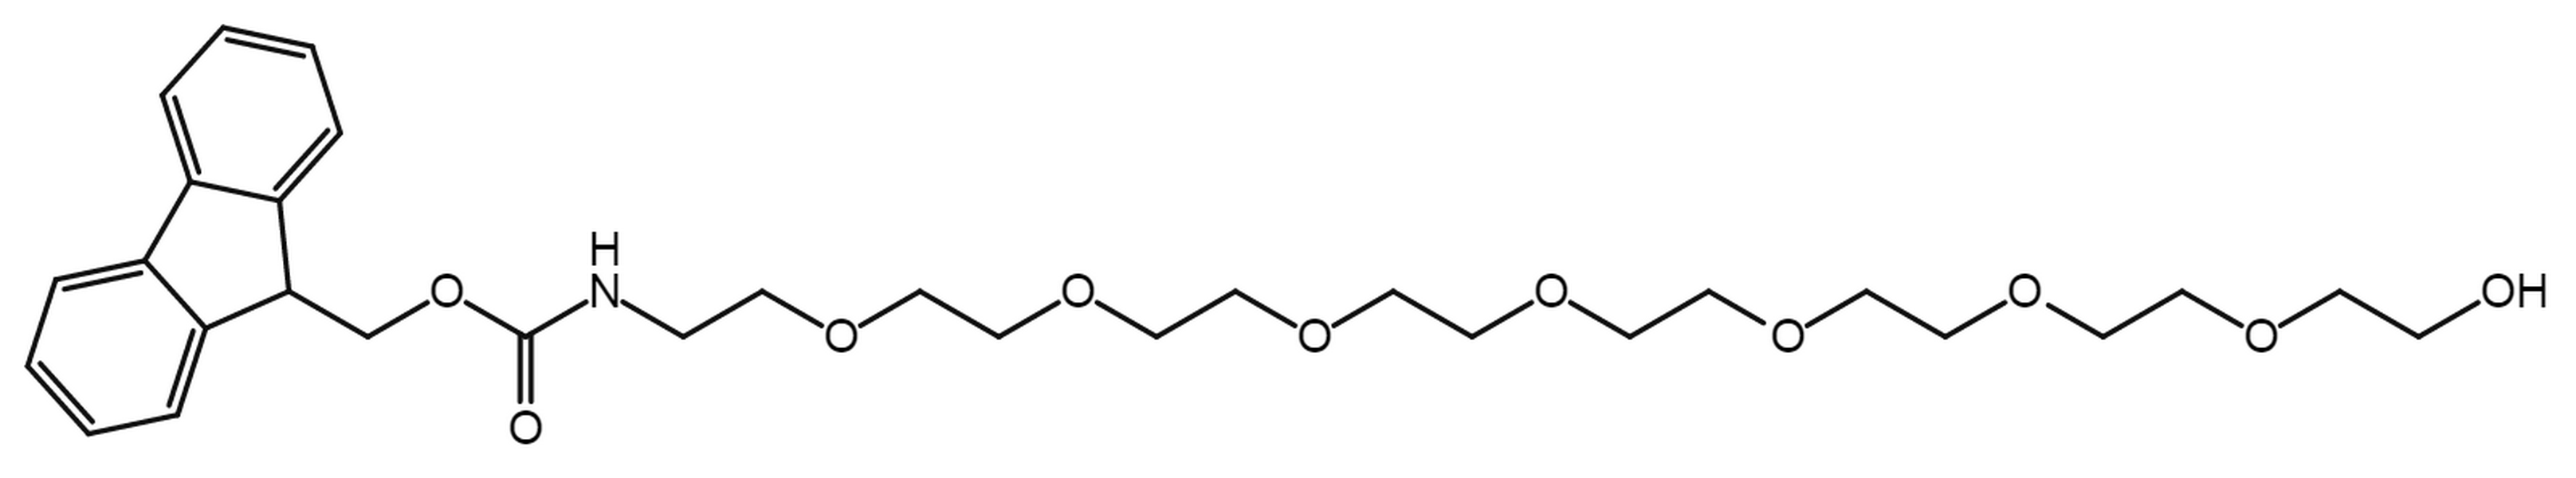 Fmoc-PEG8-alcohol